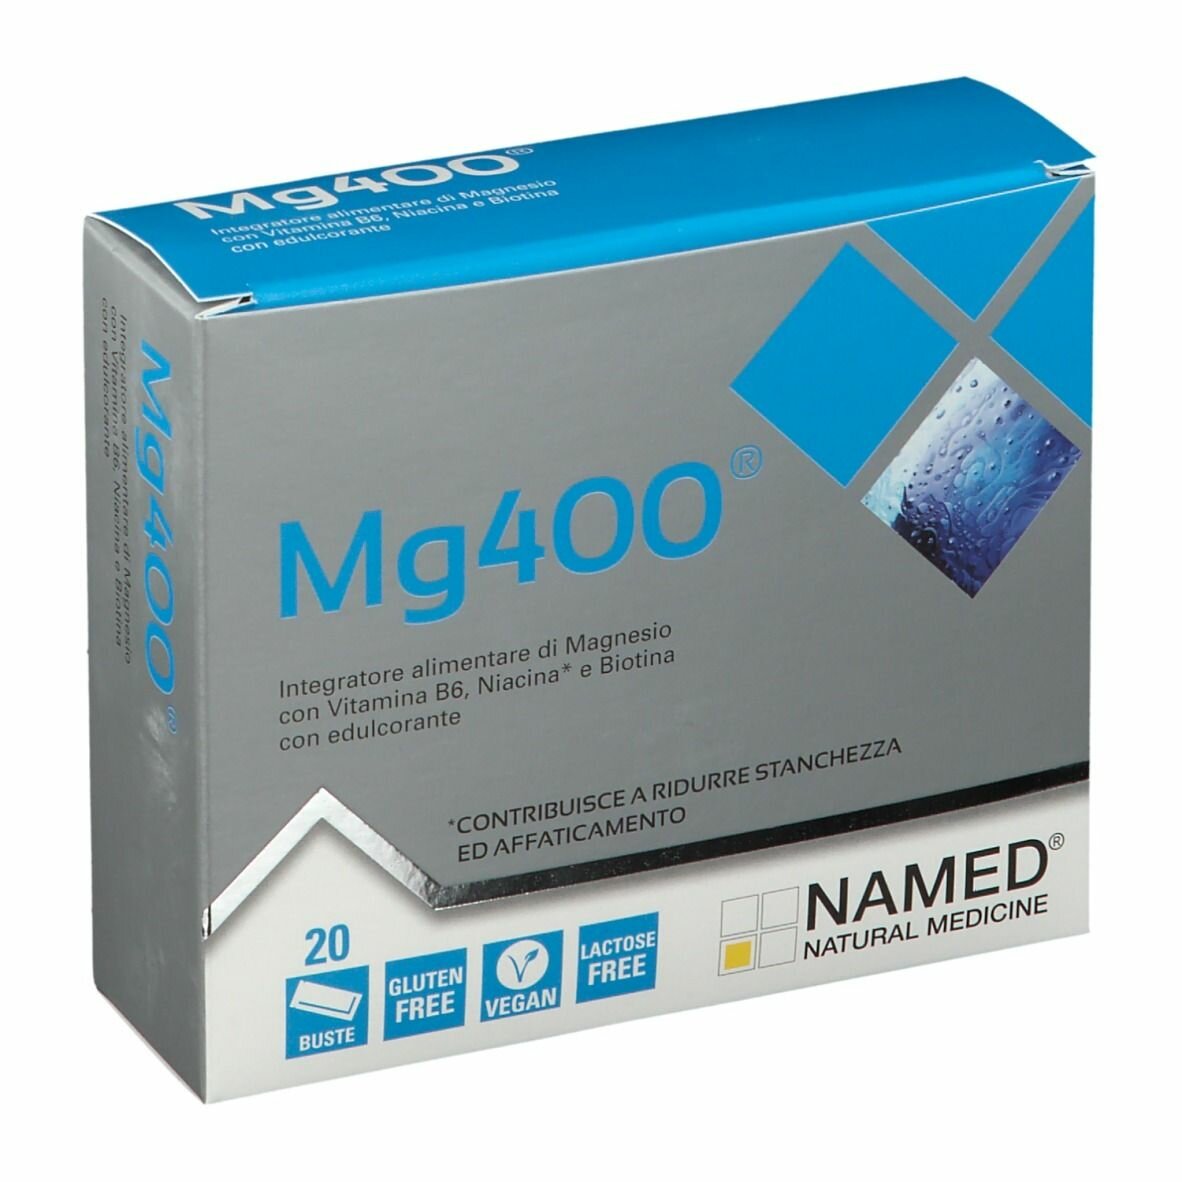 Mg400 polvere 20 buste img